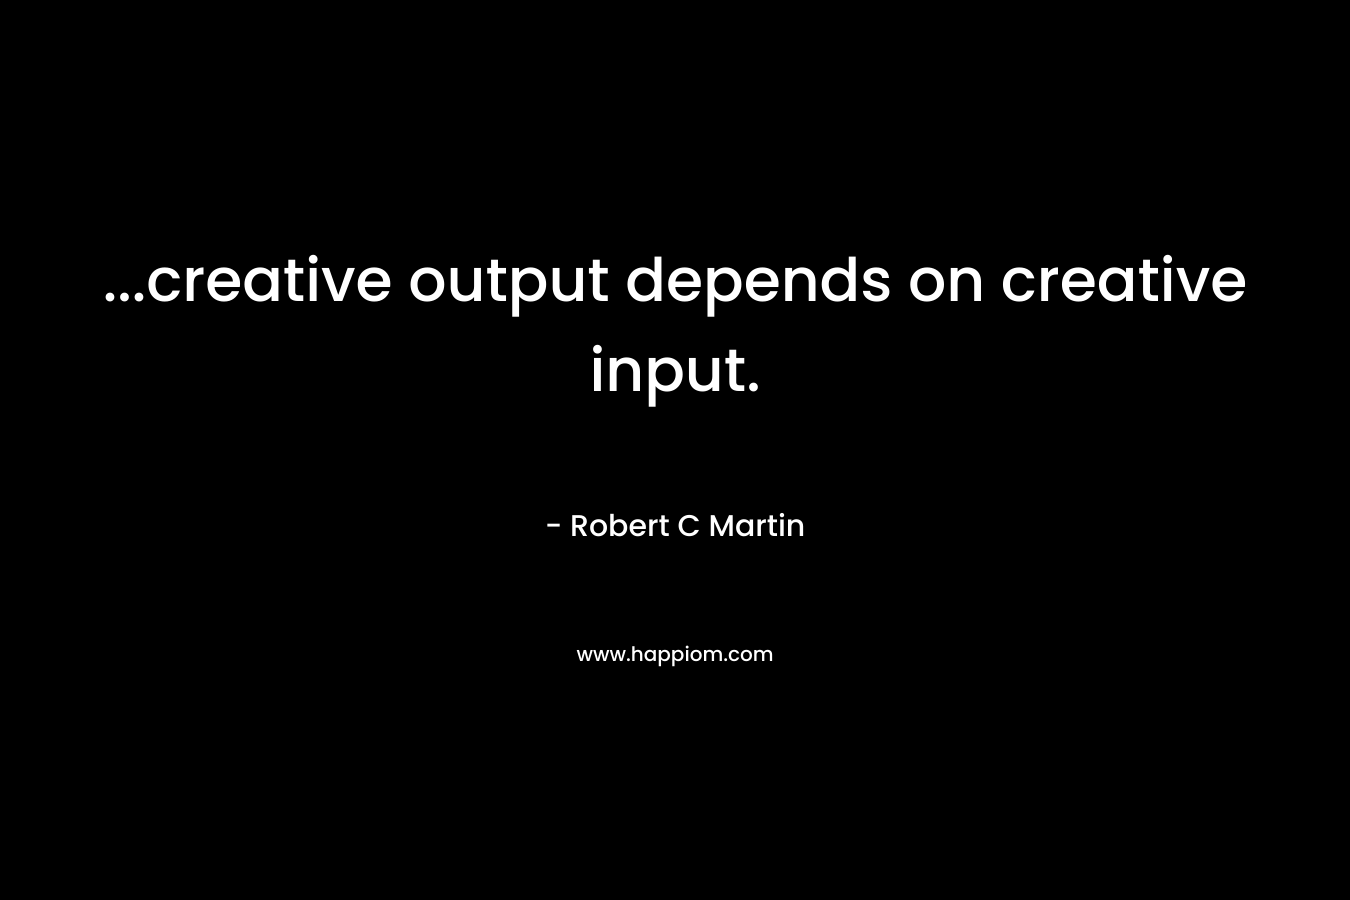 ...creative output depends on creative input.